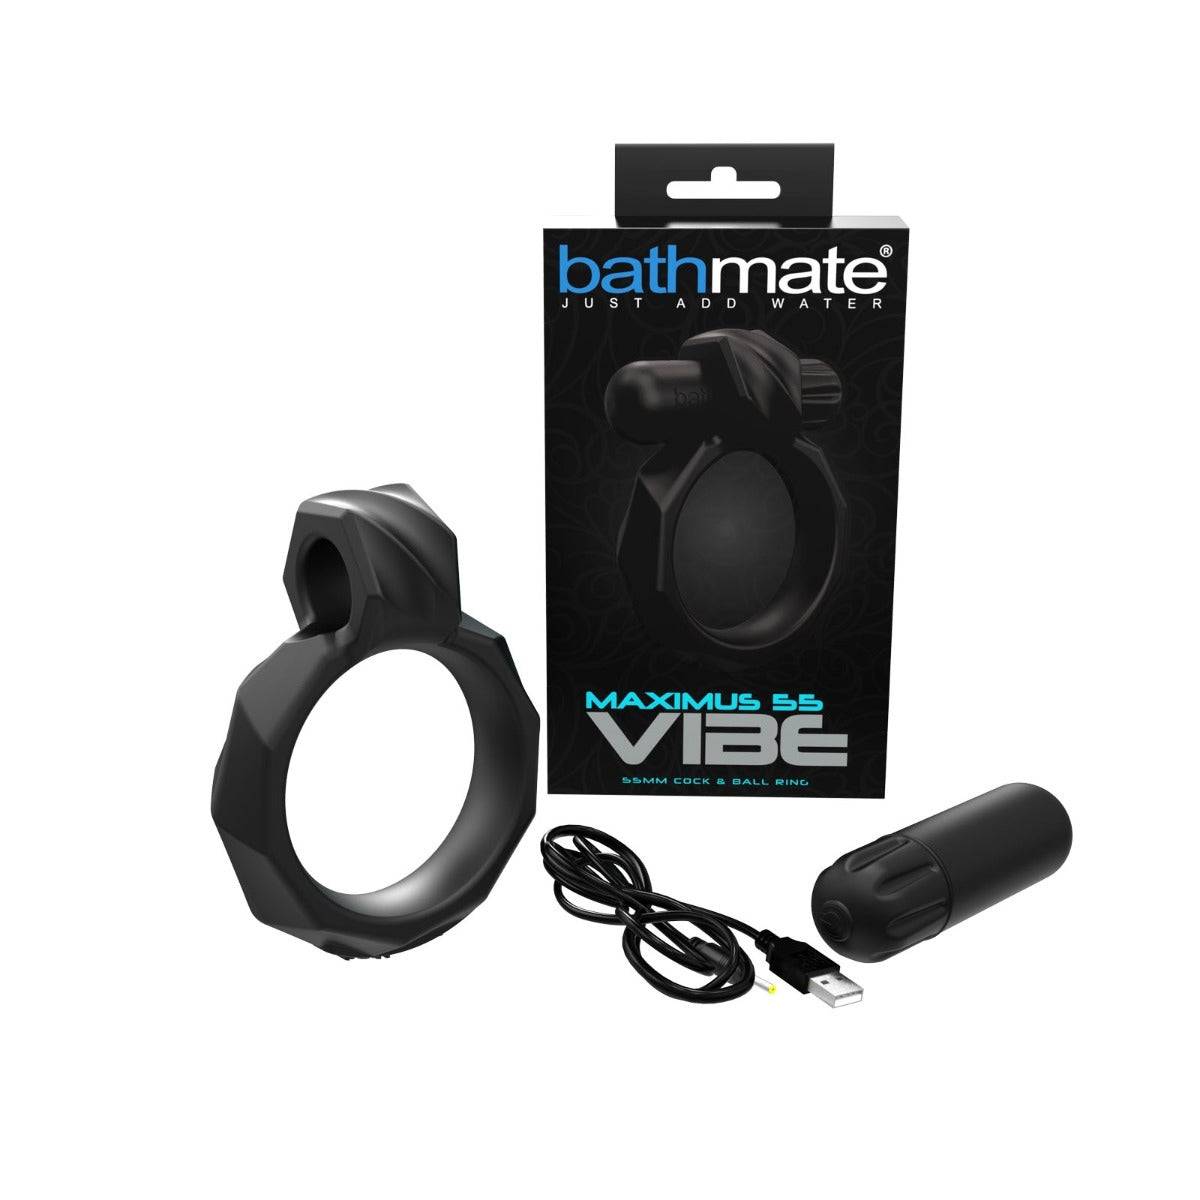 Bathmate Maximus Vibe 55 Vibrating Cock & Ball Ring Black - Simply Pleasure